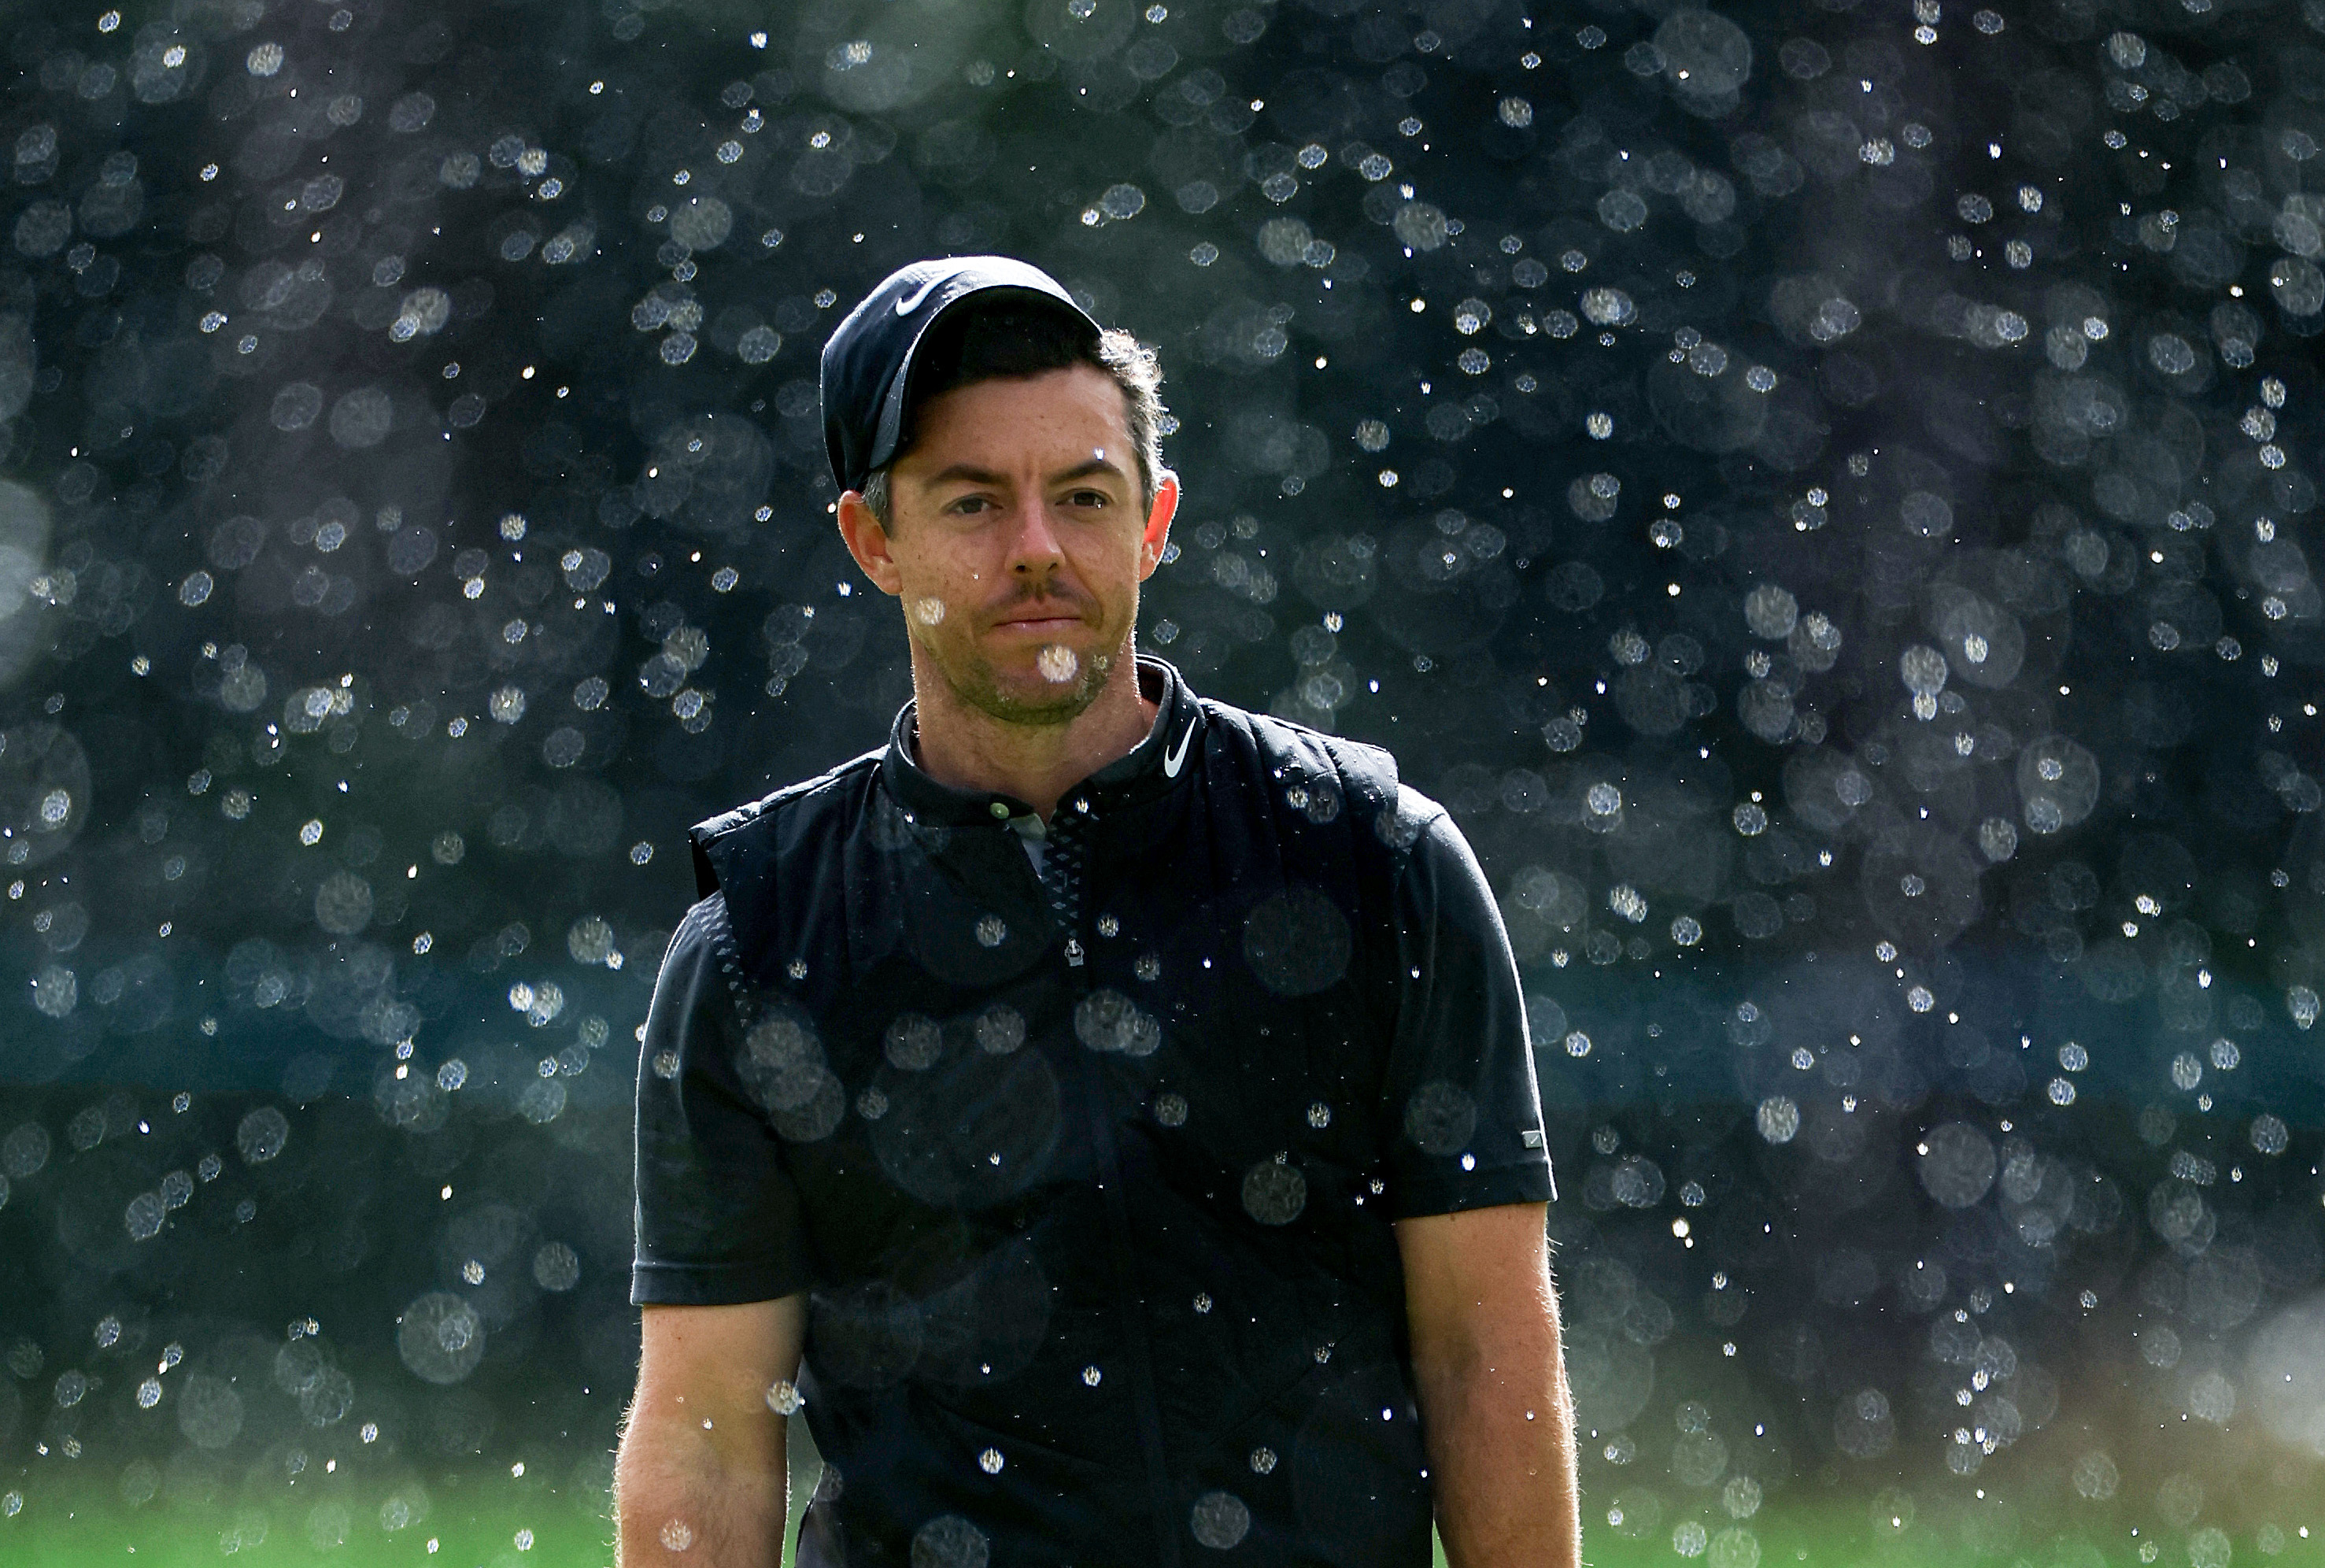 Rory McIlroy plays golf in heavy rain